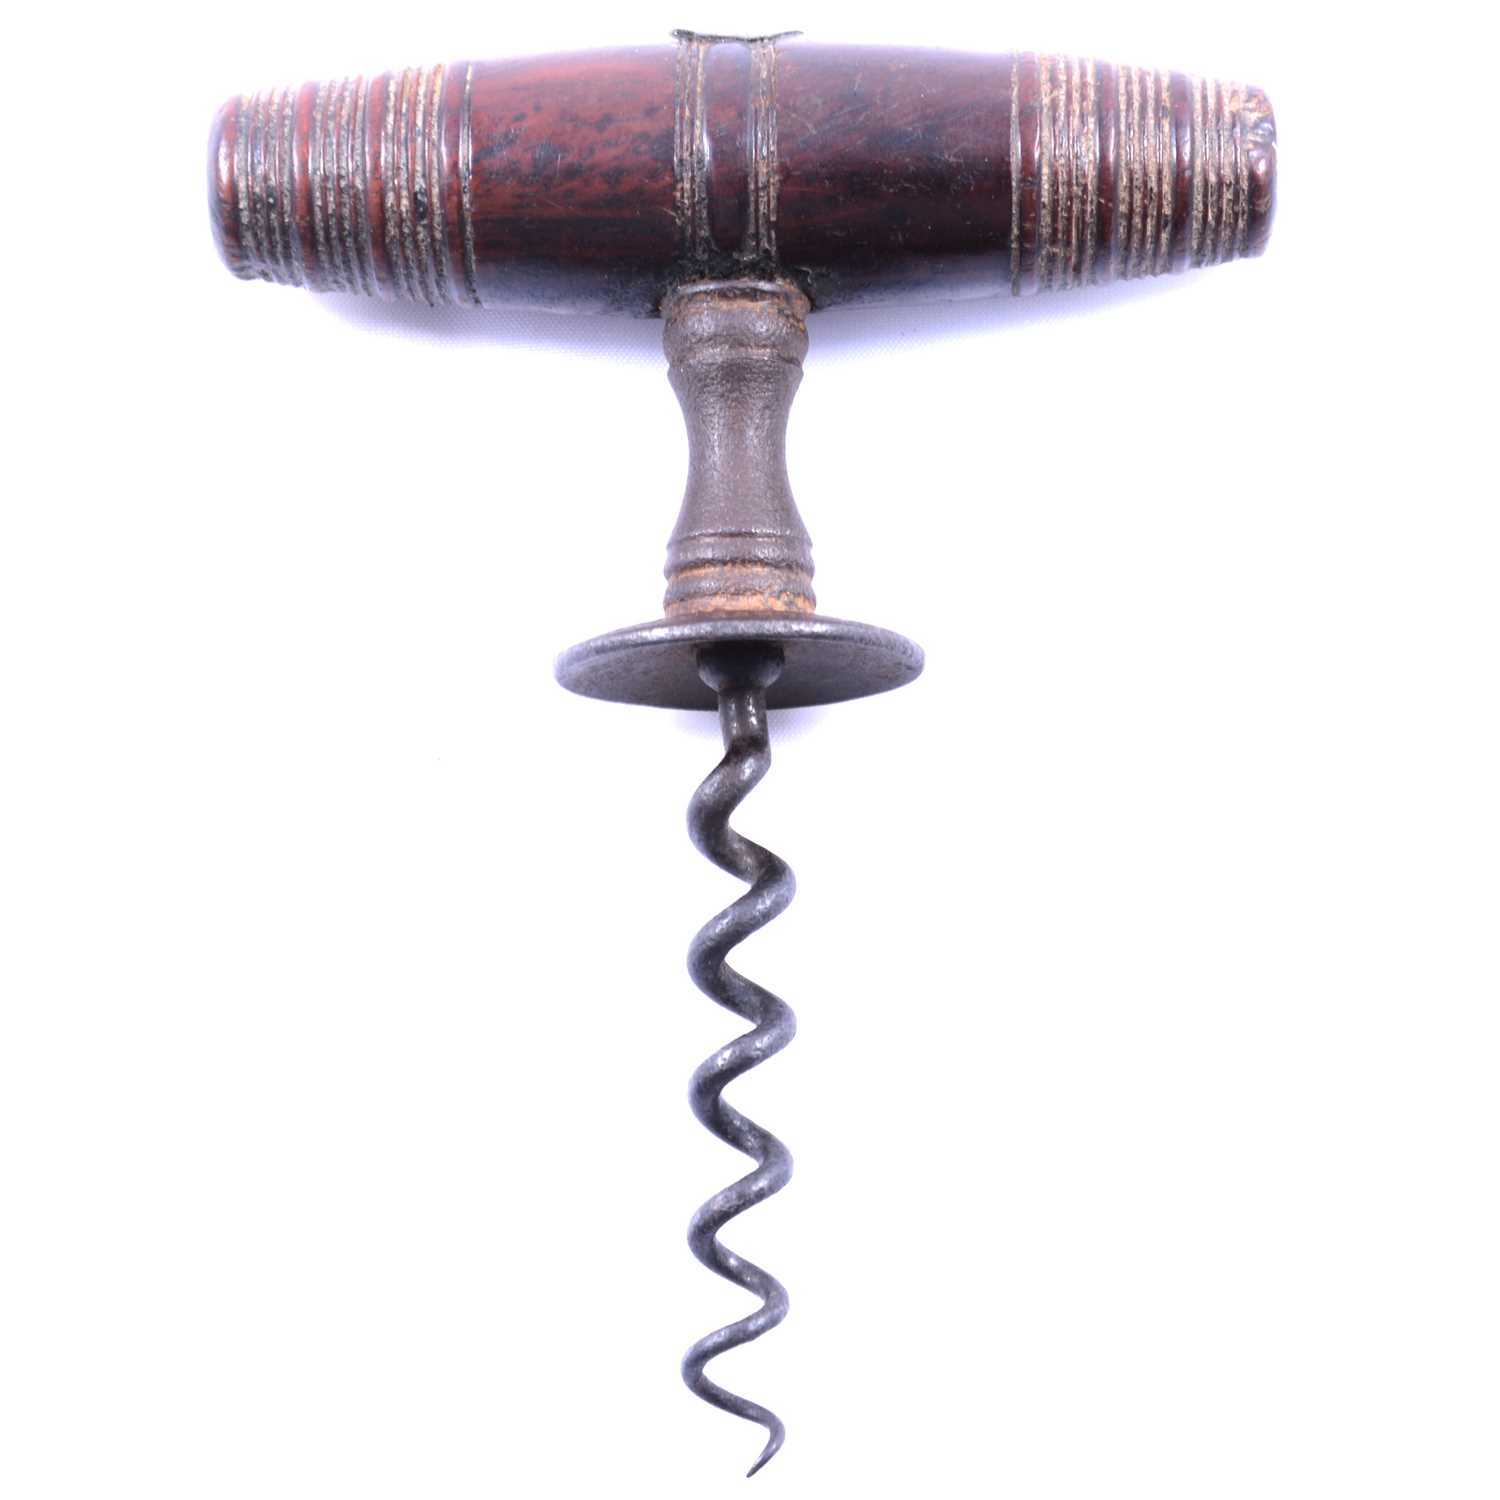 Samuel Henshall Soho Patent corkscrew, Obstando Promoves,